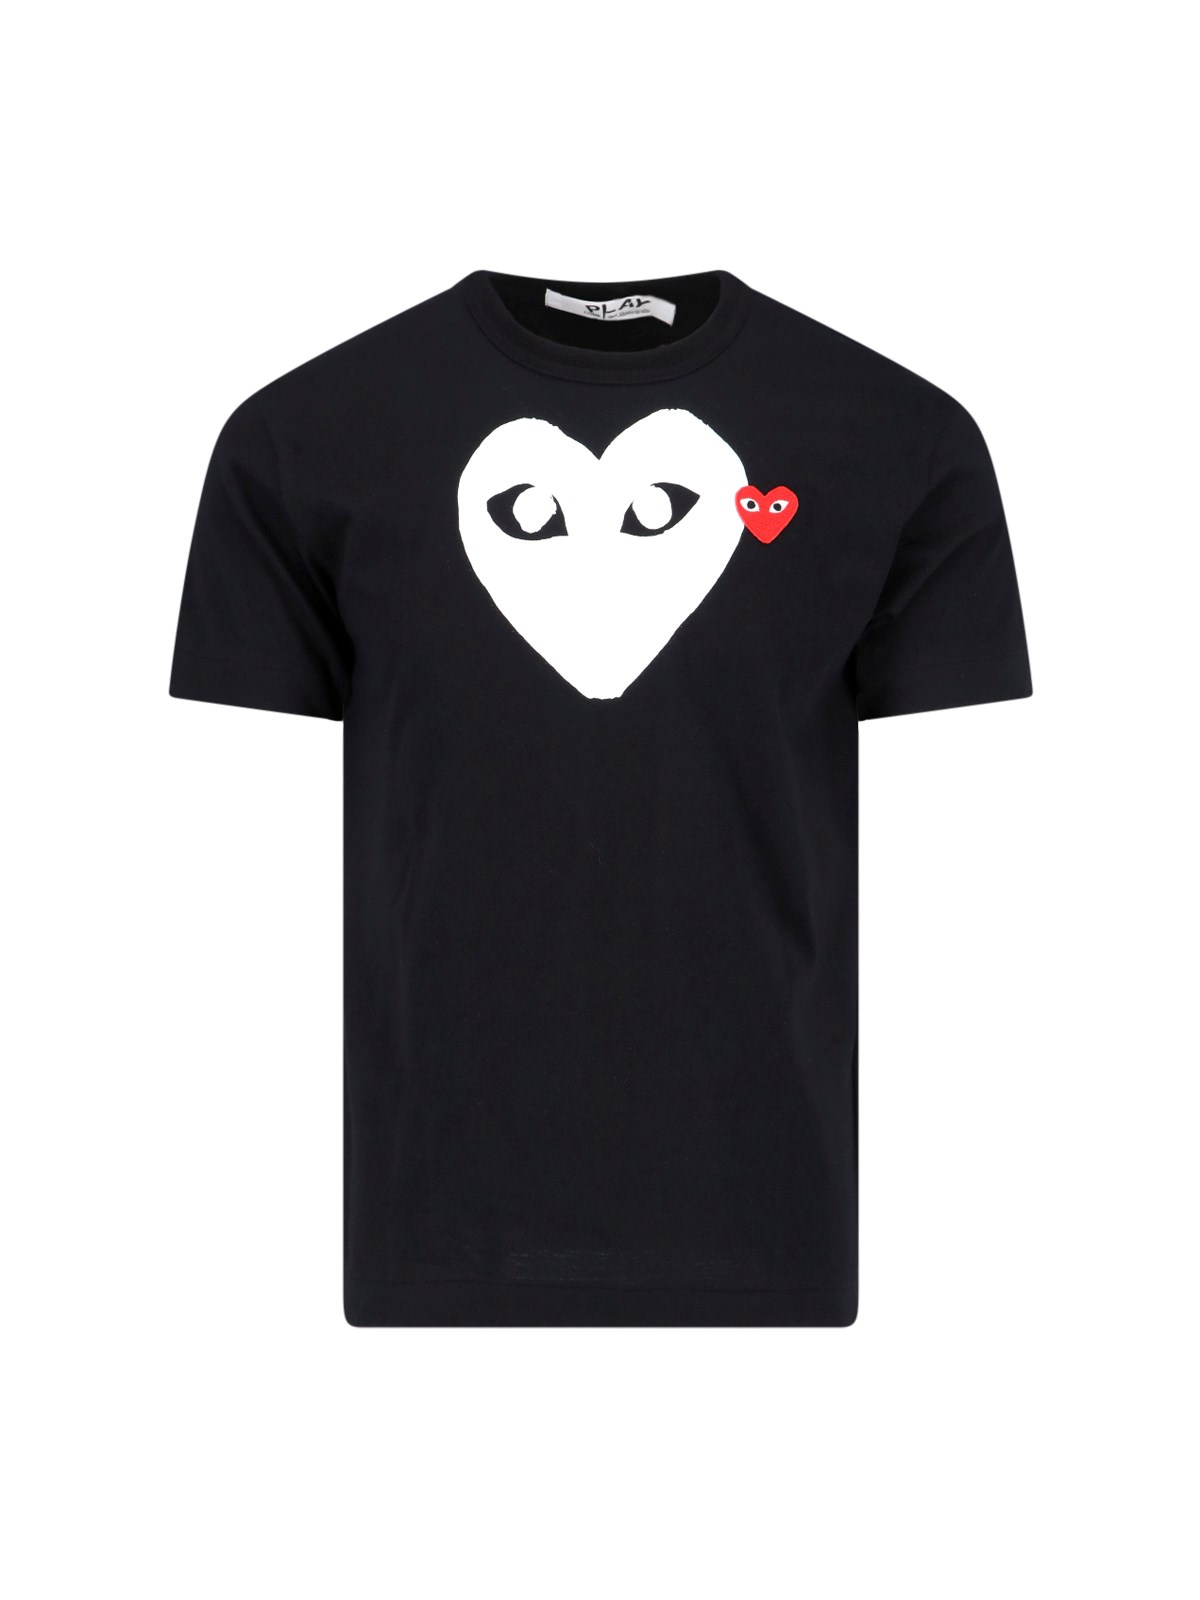 Comme Des Garçons Play Double Heart Logo T-shirt In Black